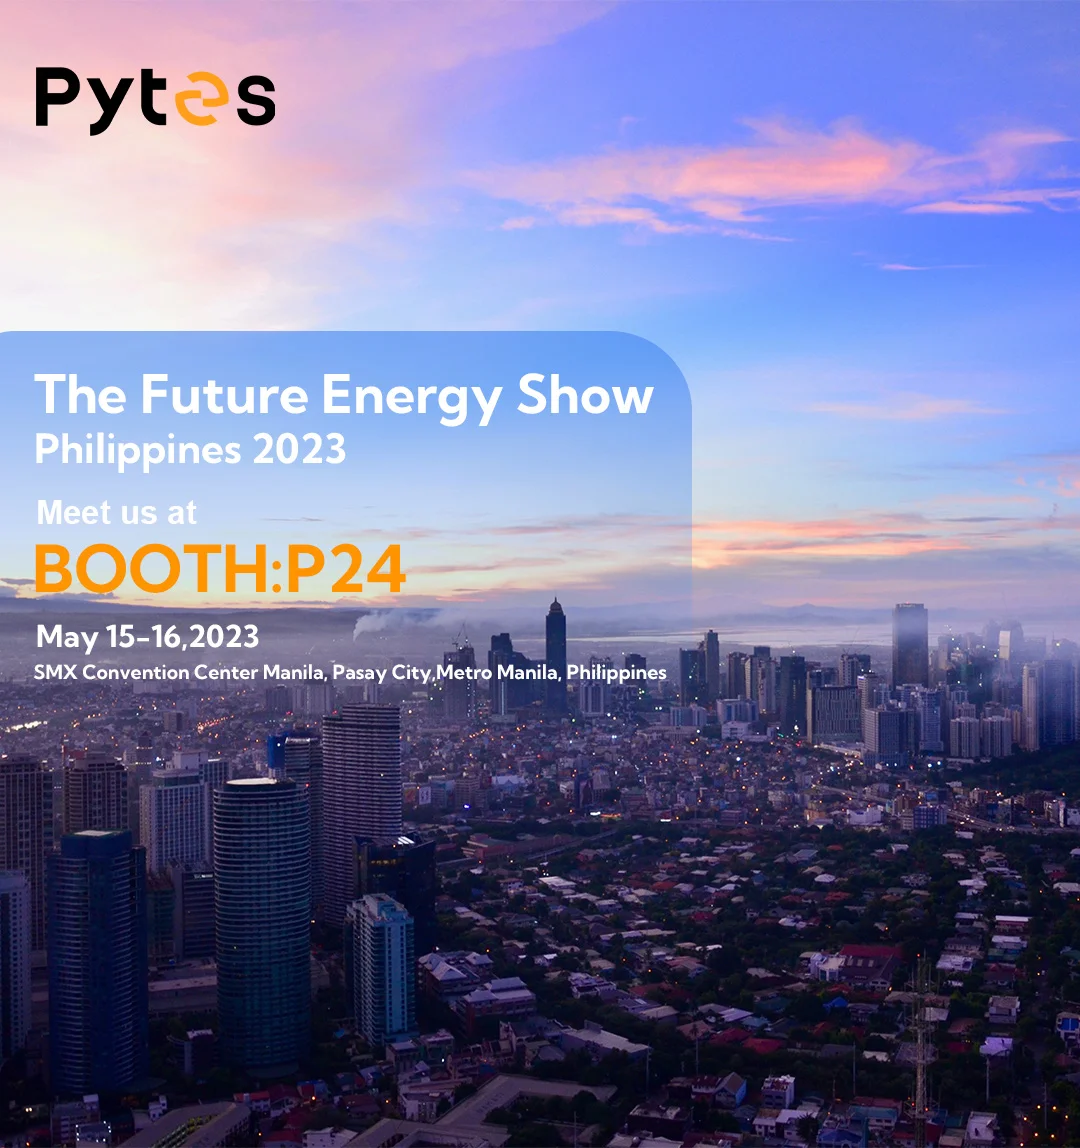 THE FUTURE ENERGY SHOW FILIPINE 2023/05/15-2023/05/16